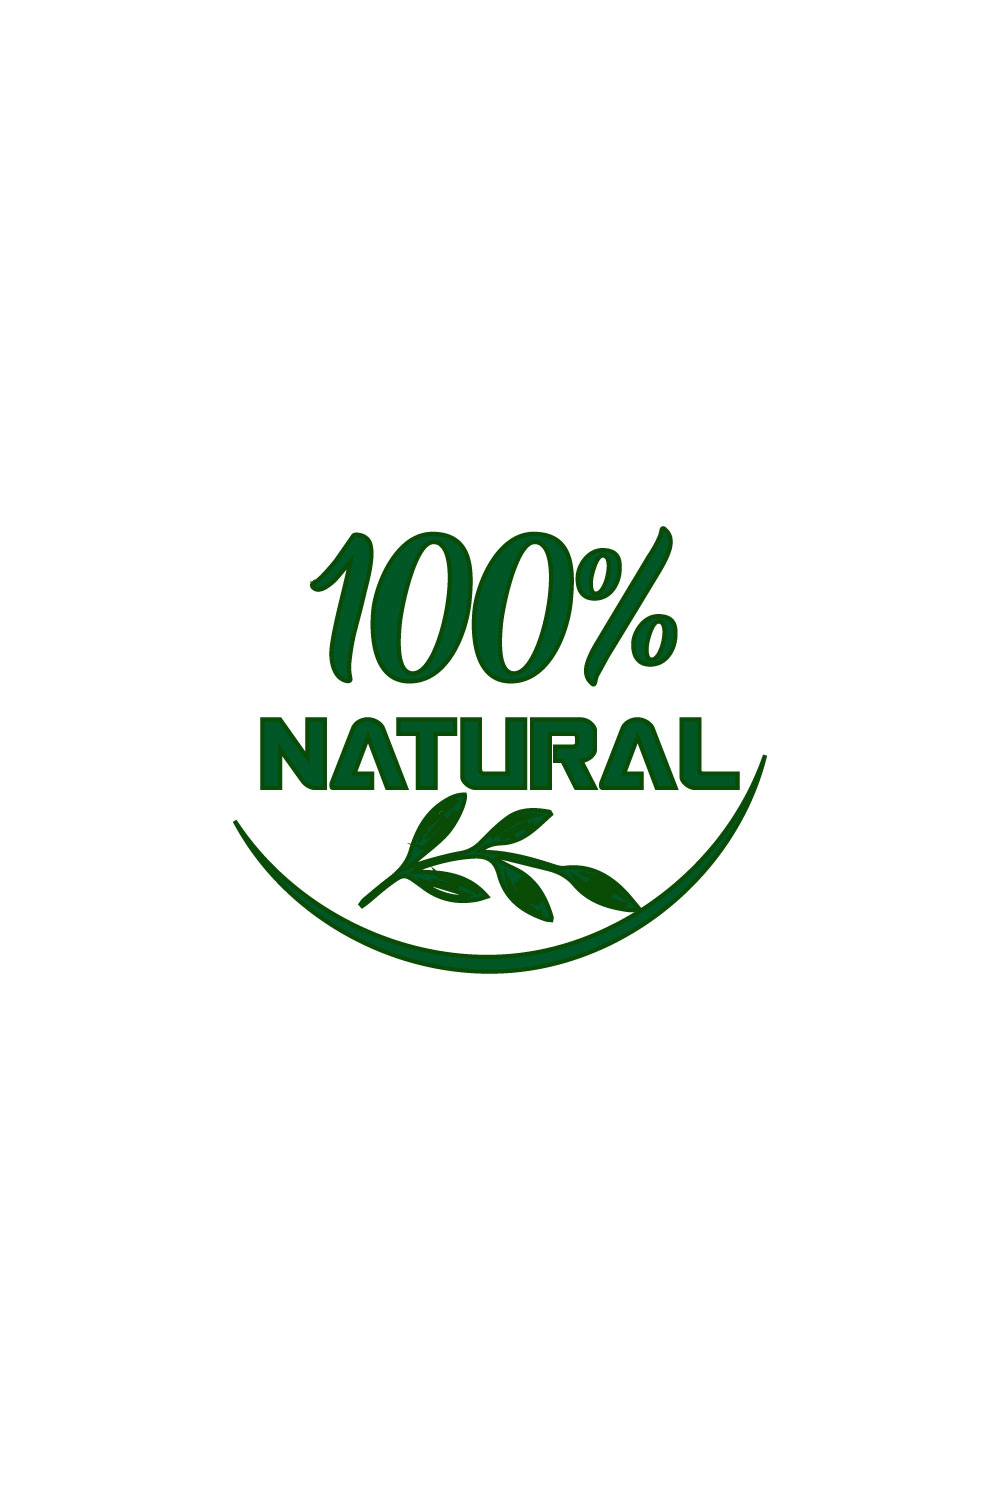 Free natural label logo pinterest preview image.